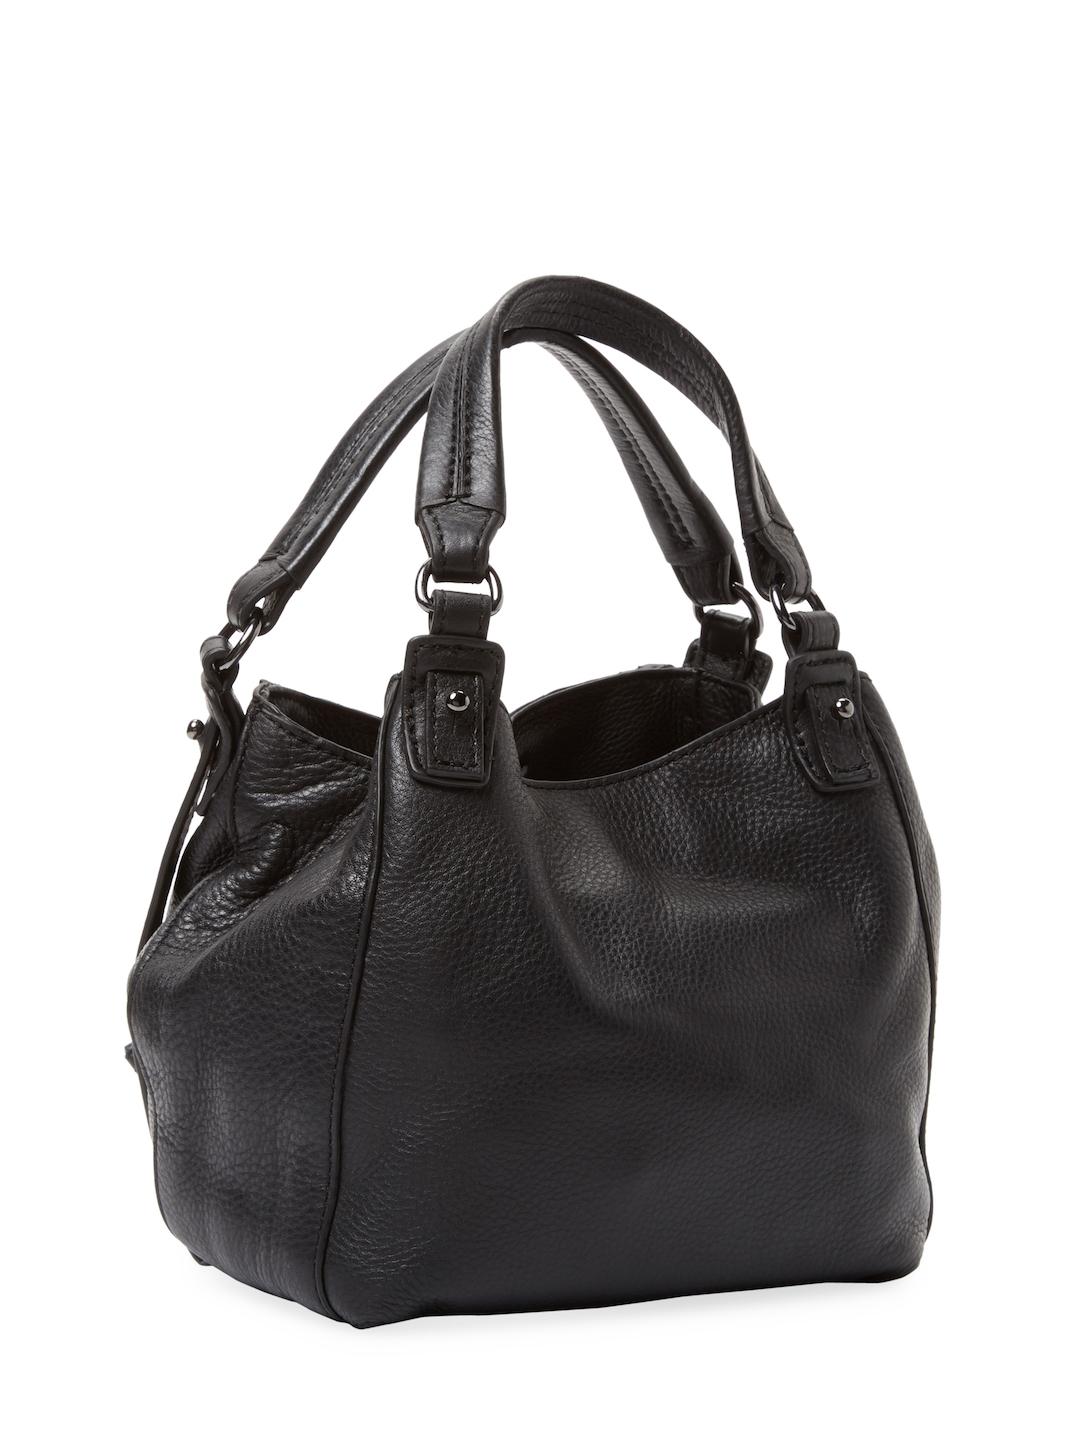 Kooba Mini Jonnie Leather Crossbody Bag in Black - Lyst